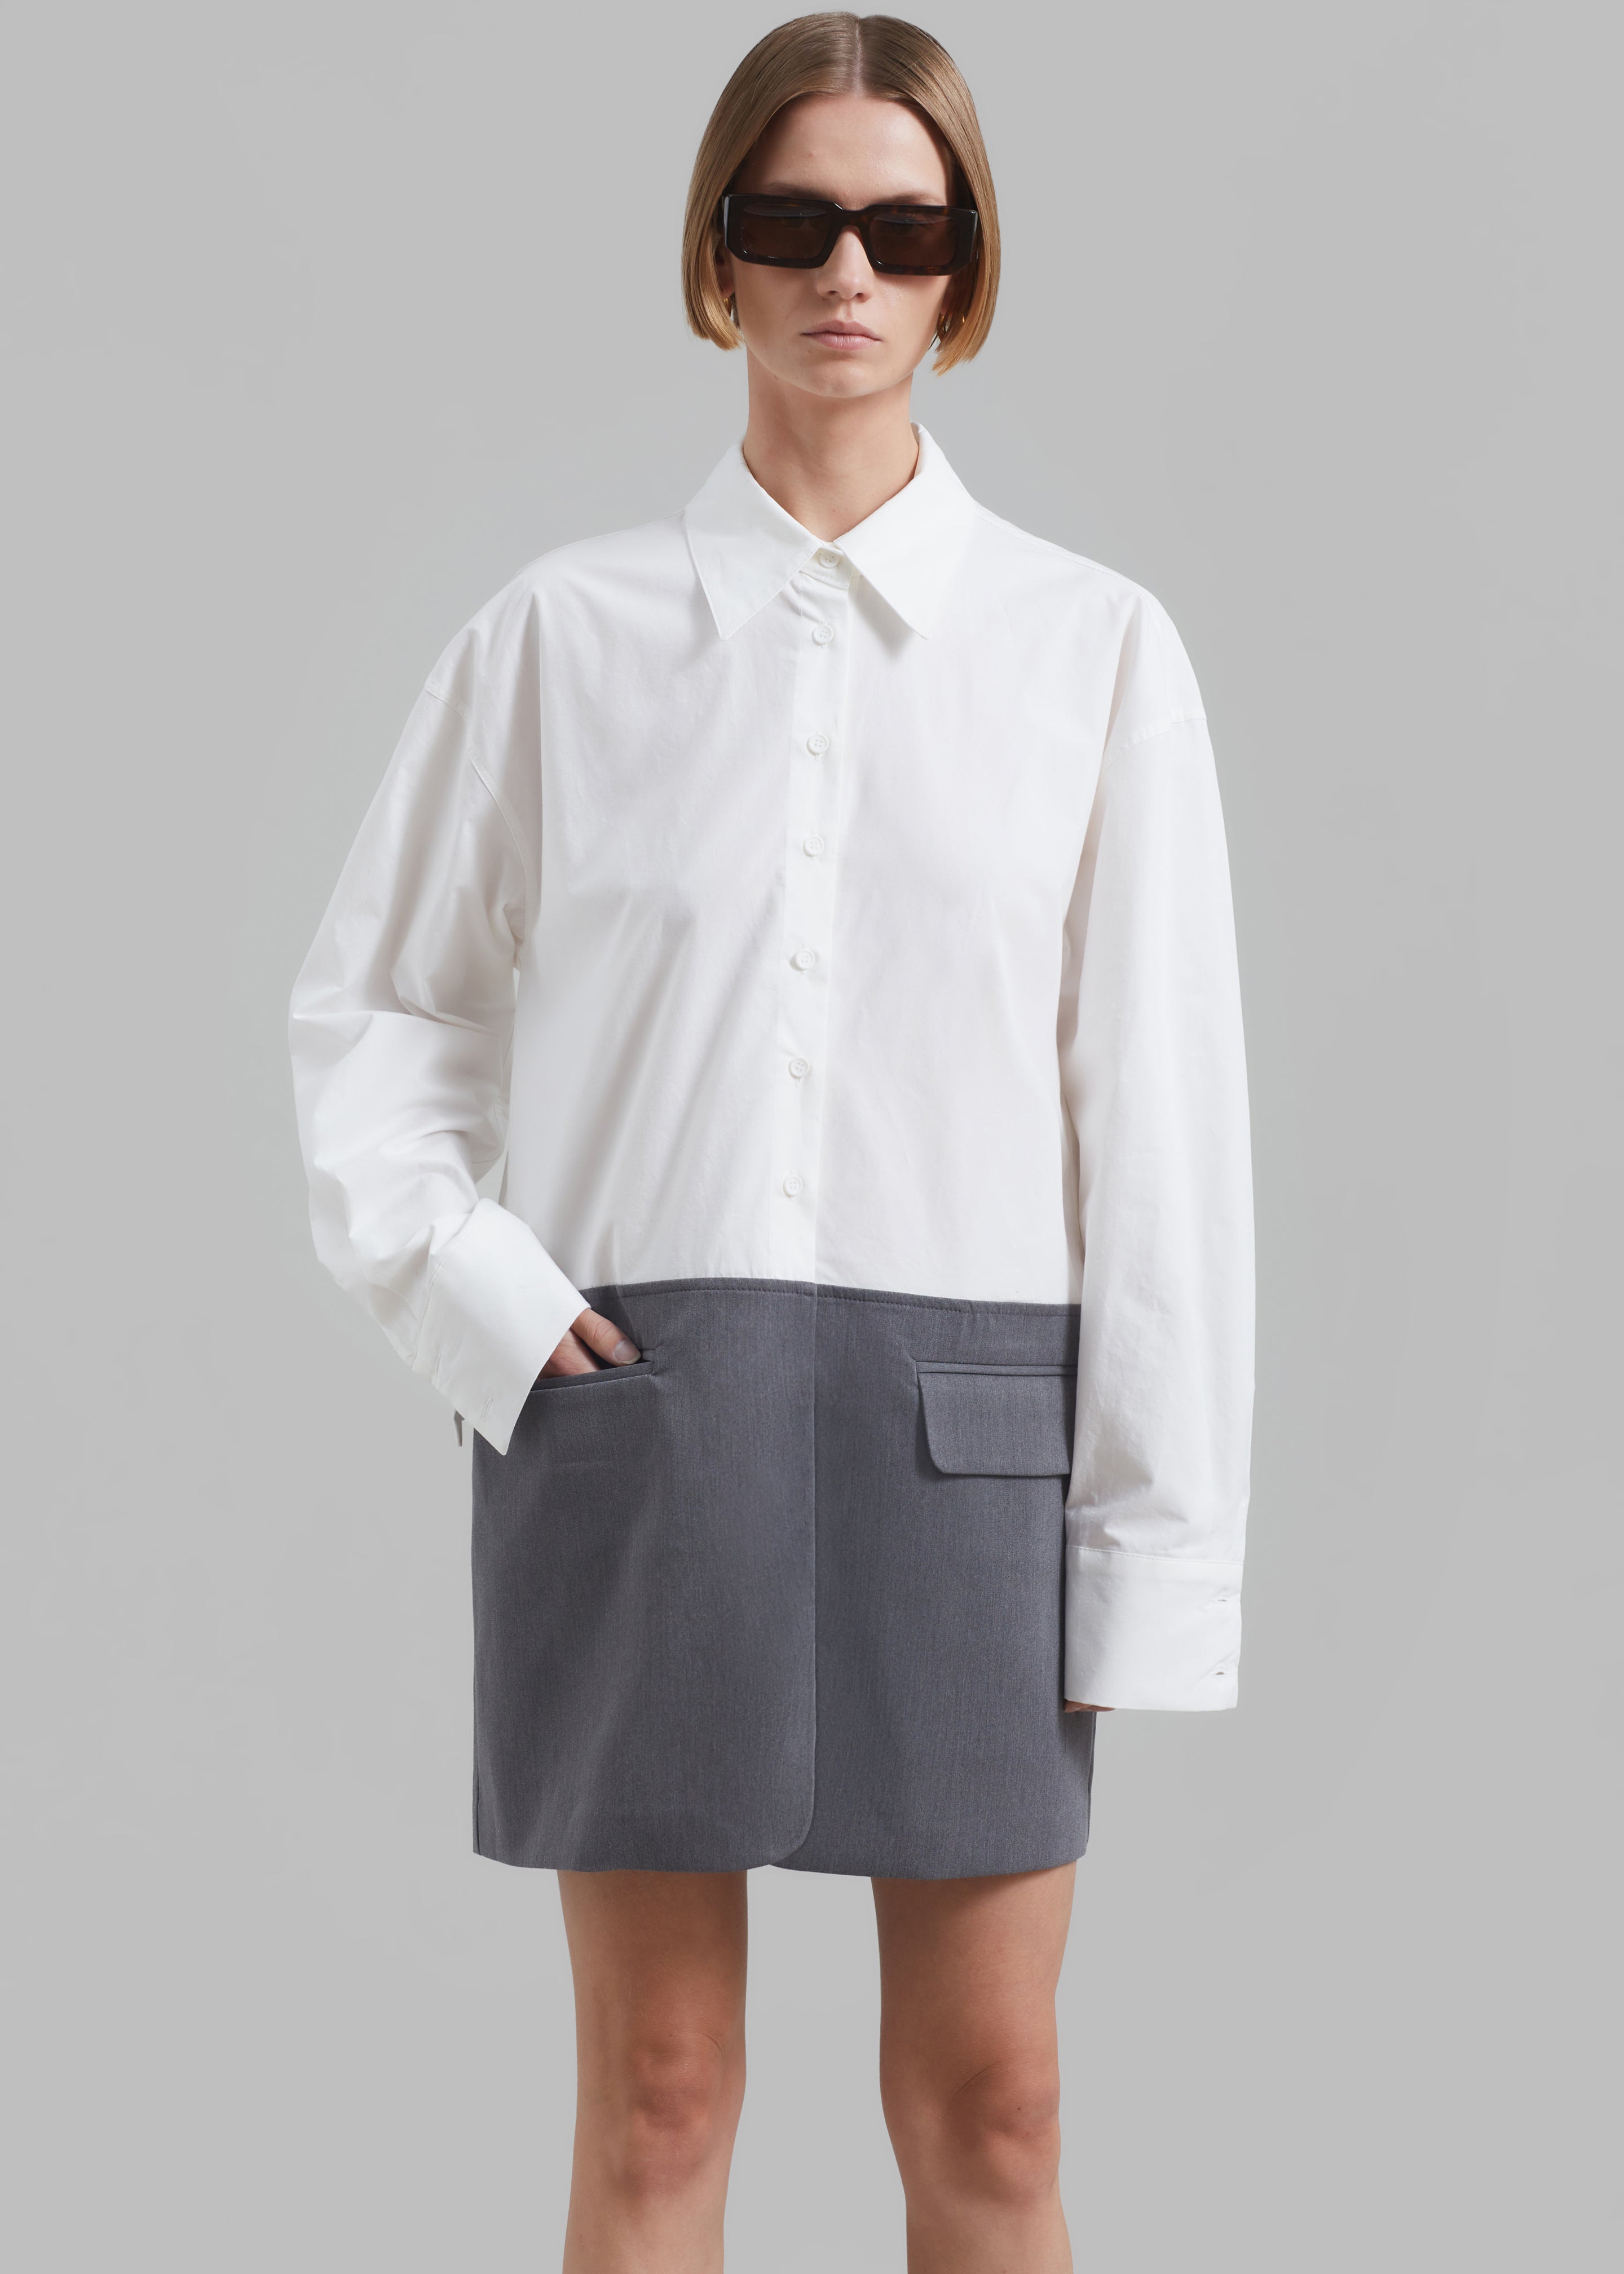 Marissa Shirt Dress - White/Grey - 3